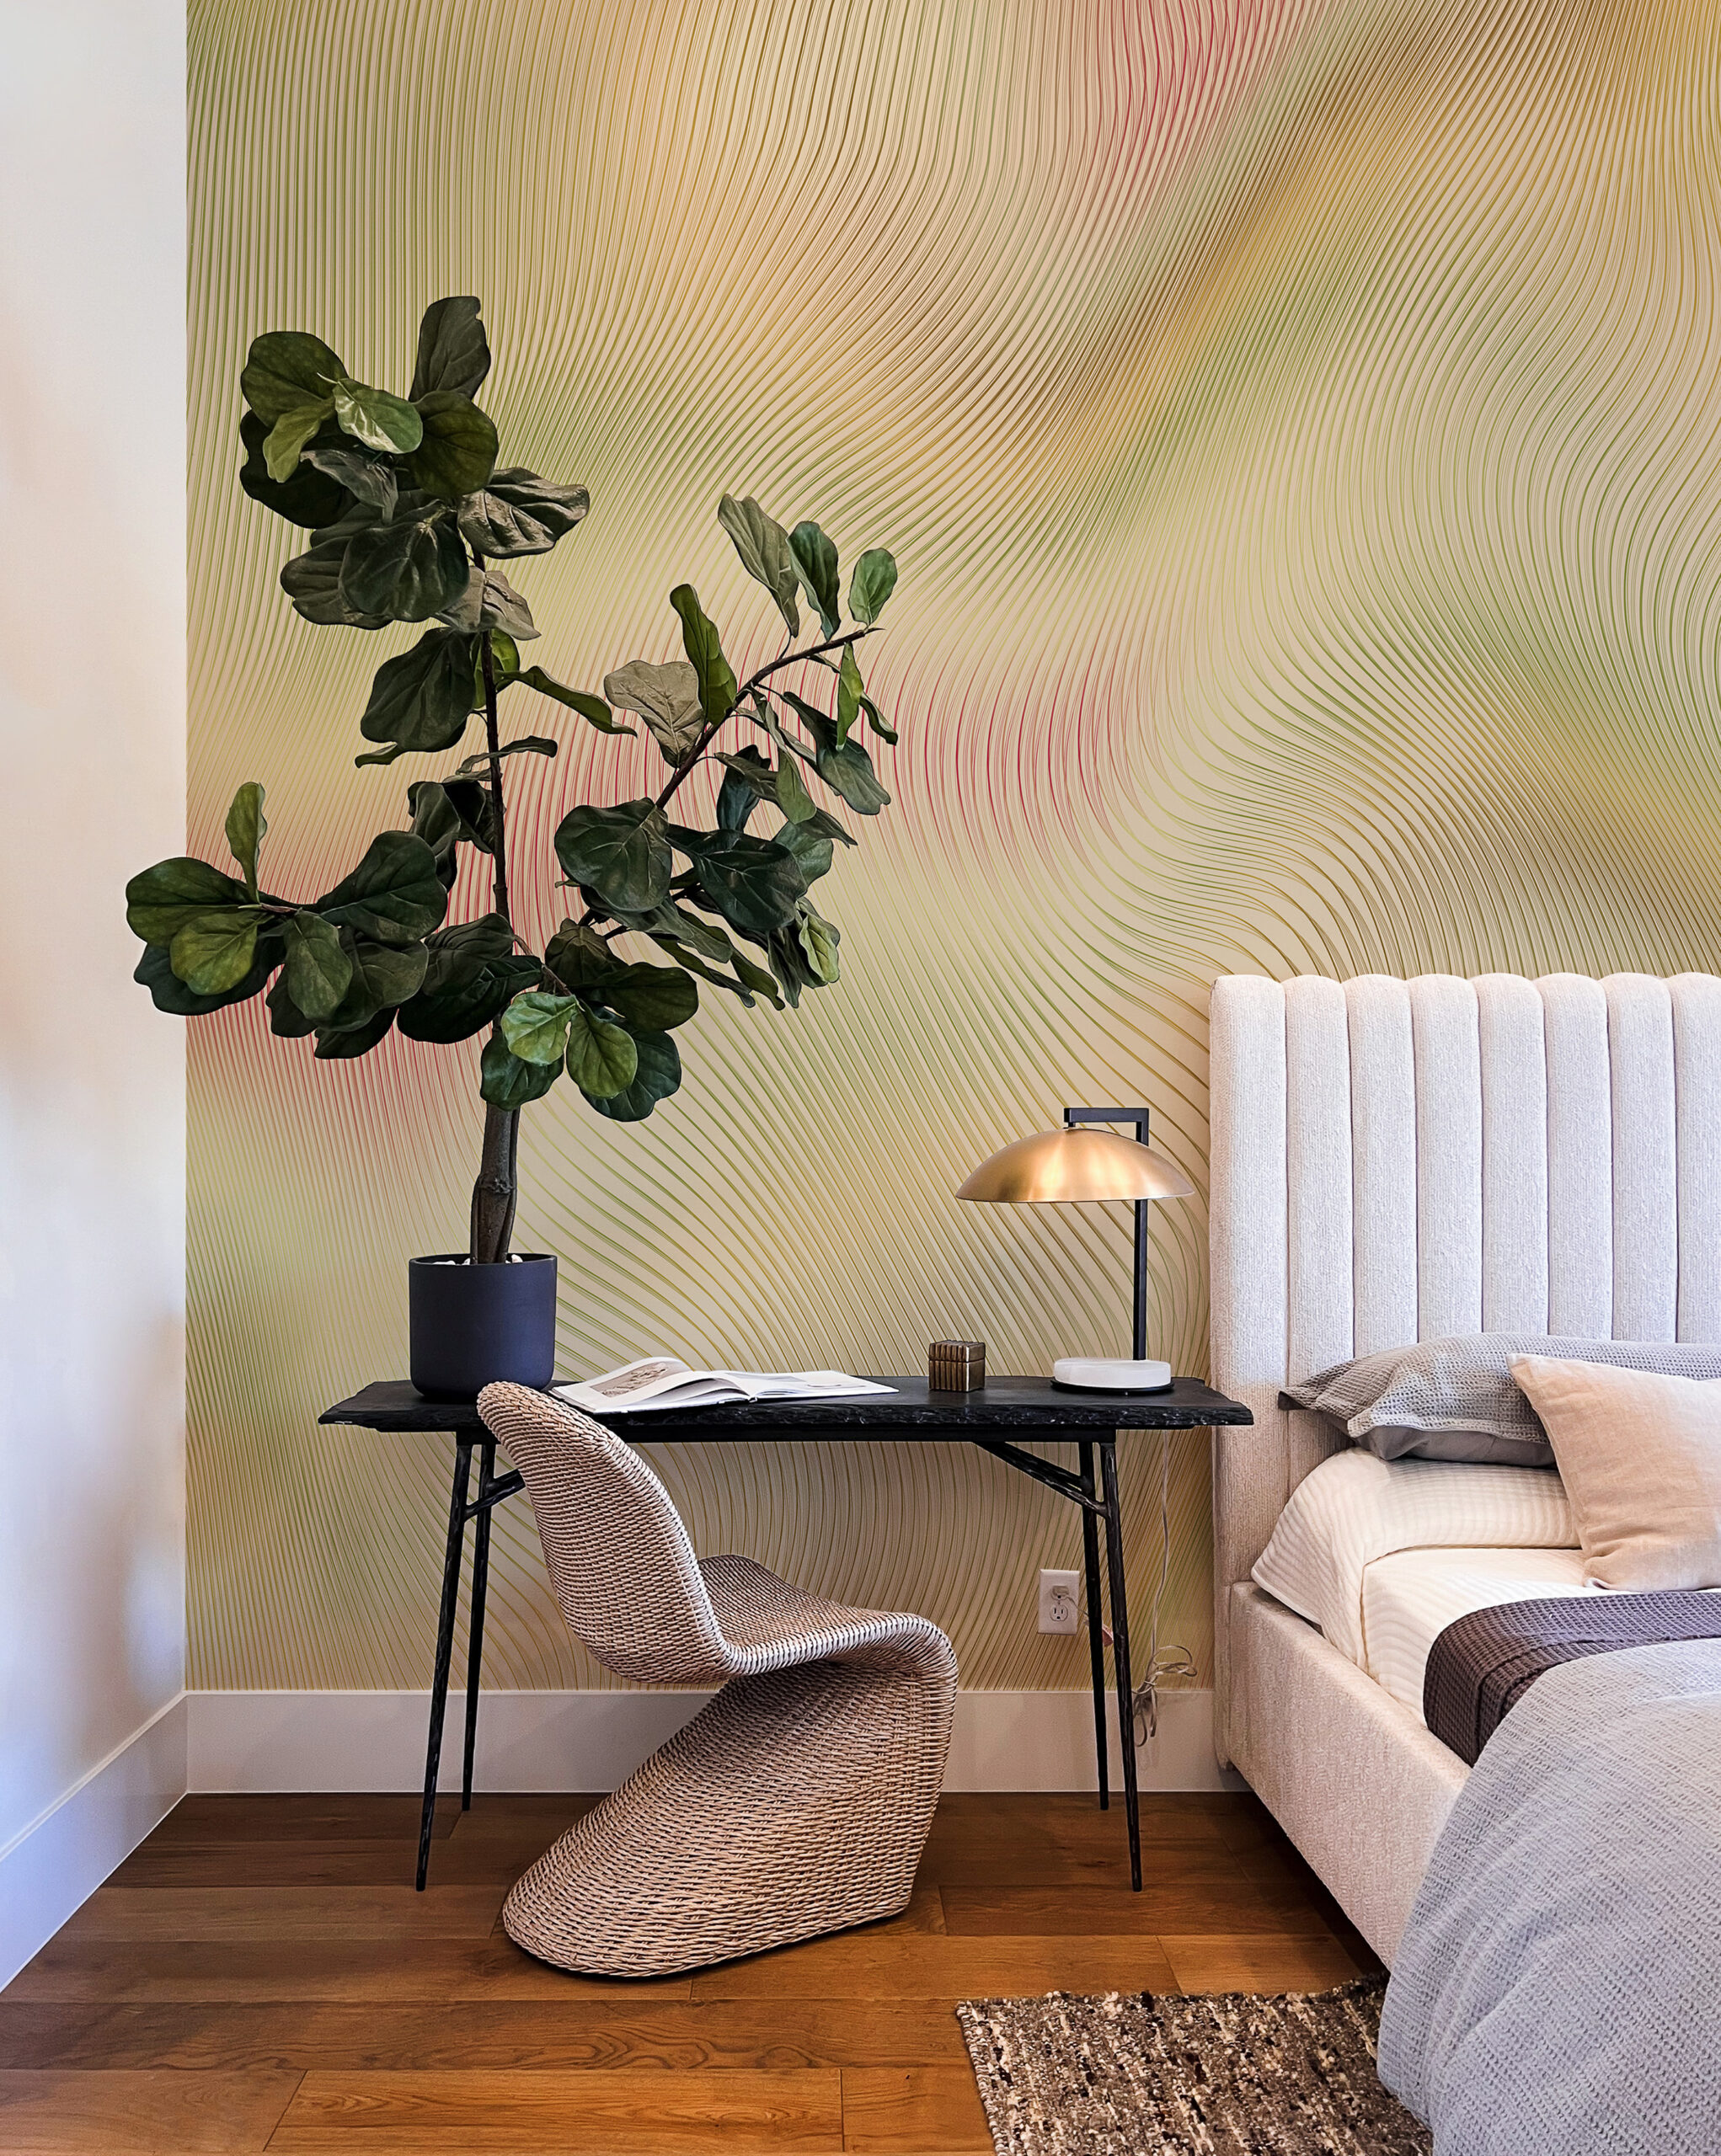 Interferenze-Lime-MaVoix-wallpaper-by-Studio-Lievito-pattern-Collezione-Racconti-bedroom-styling